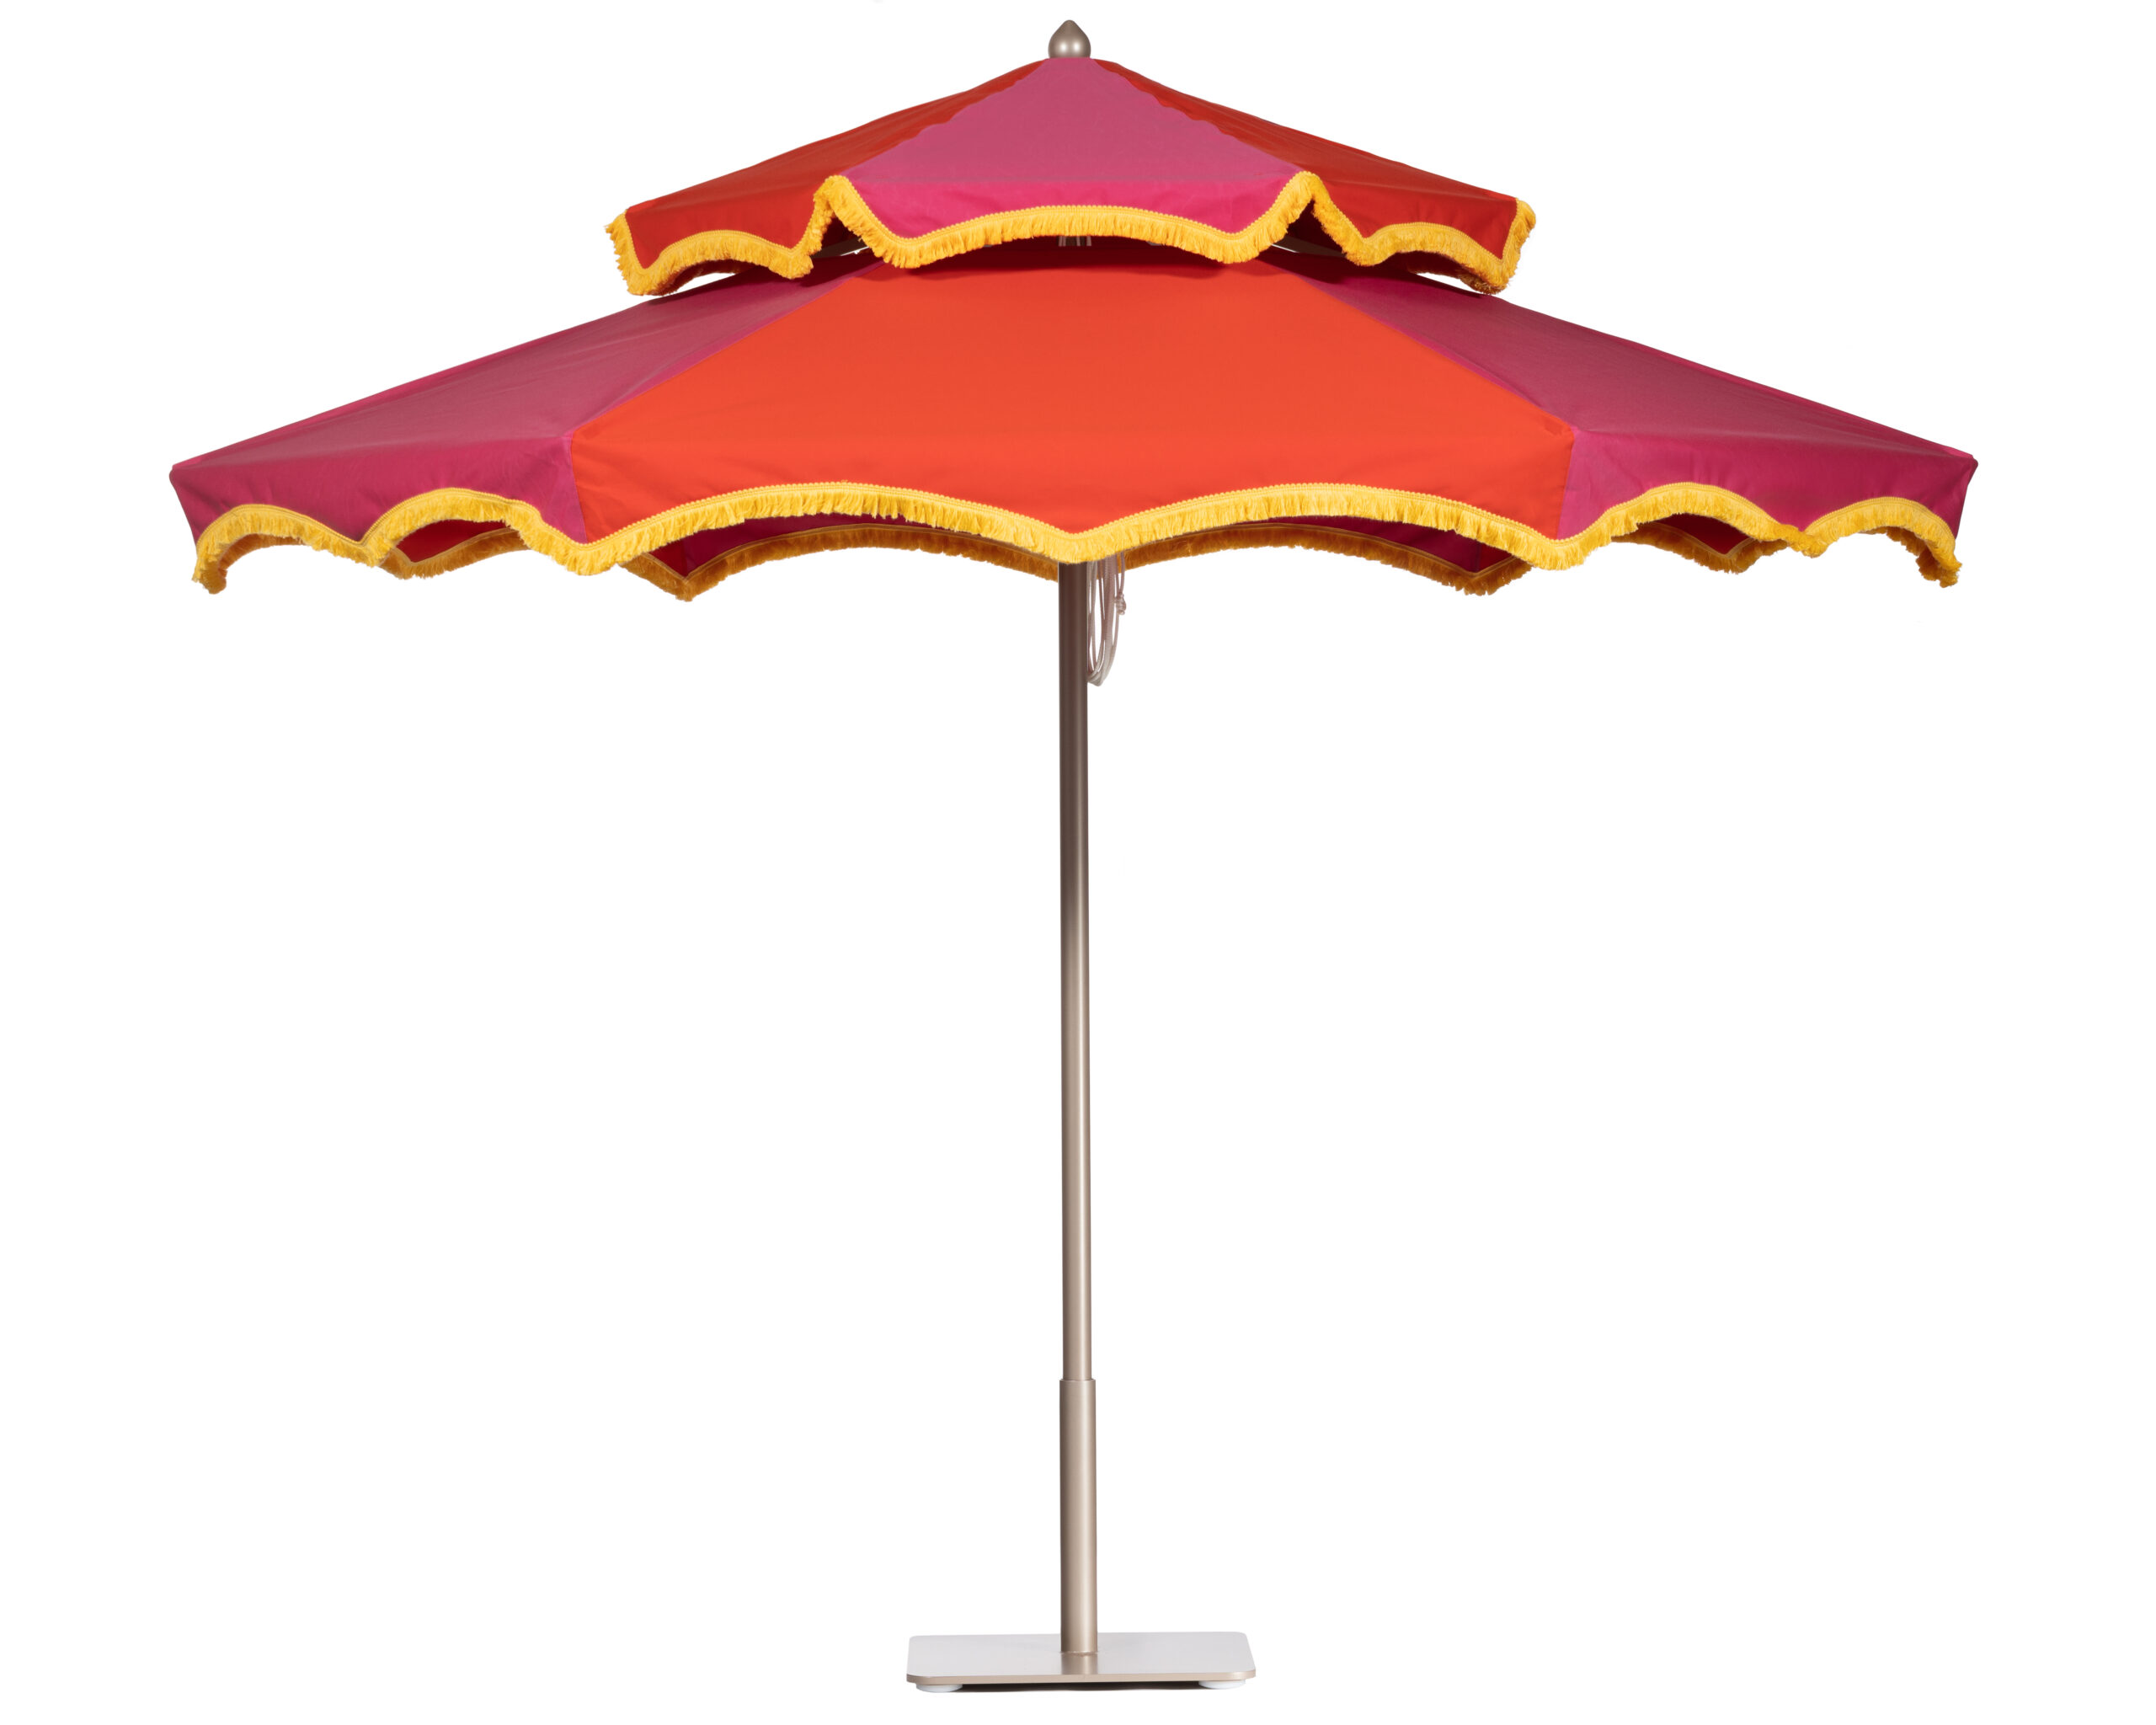 Image of studio shot of a Santa Barbara umbrella